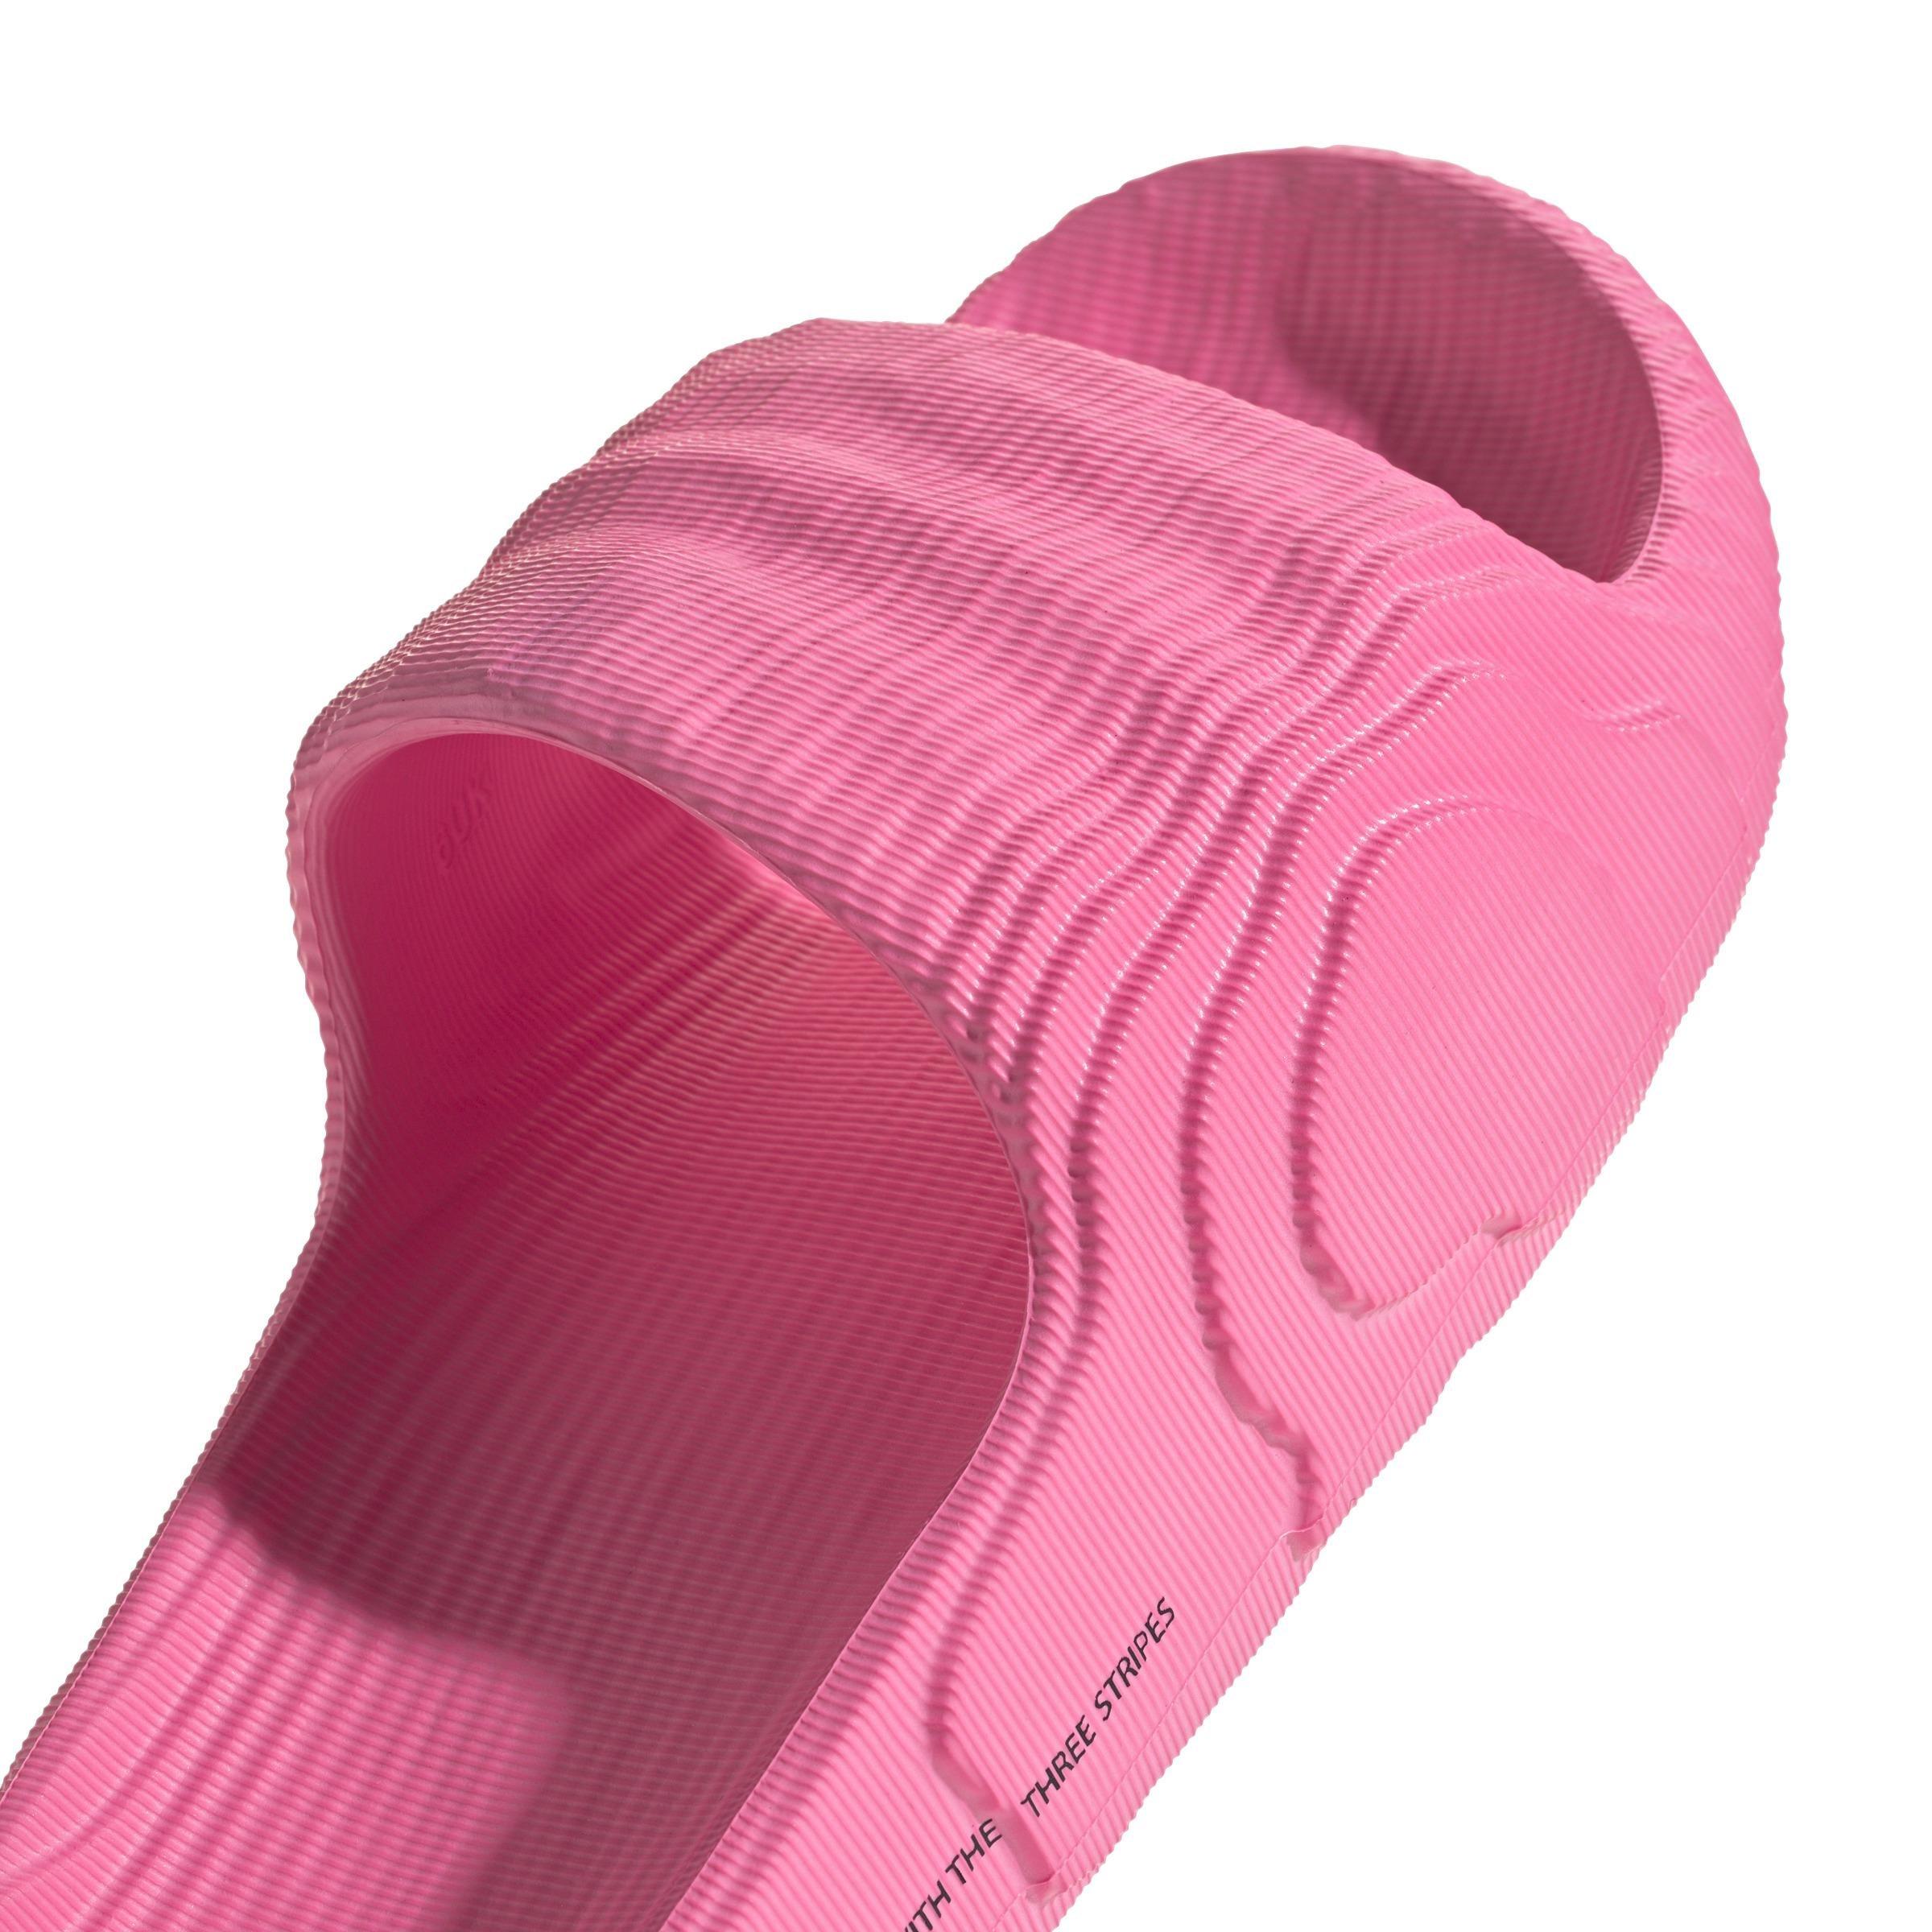 adidas - Women Adilette 22 Slides, Pink